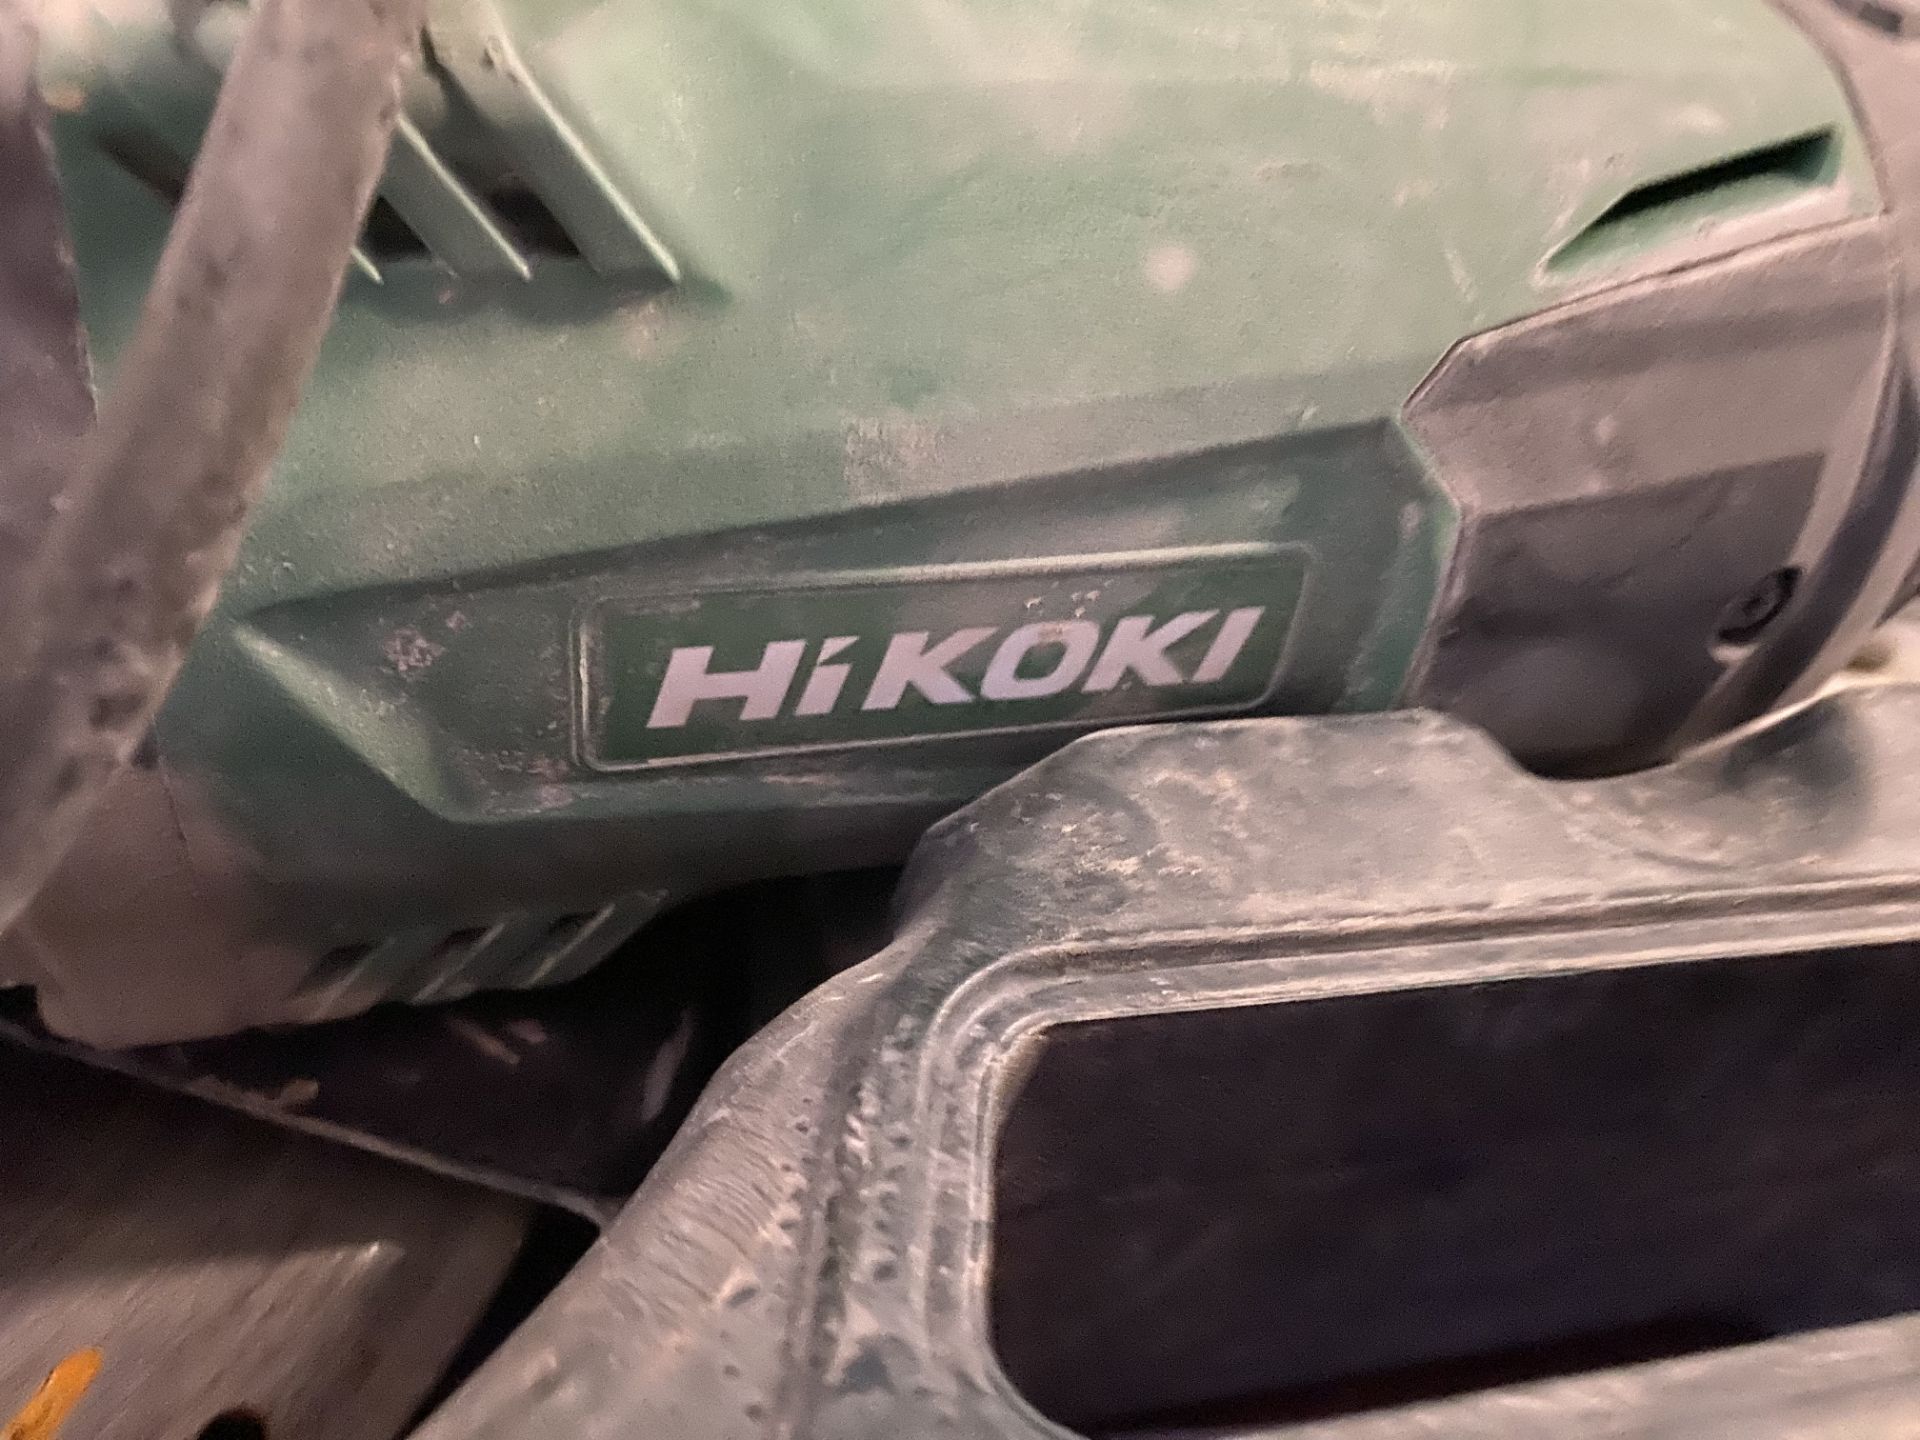 Hikoki disc cutter - Image 2 of 3